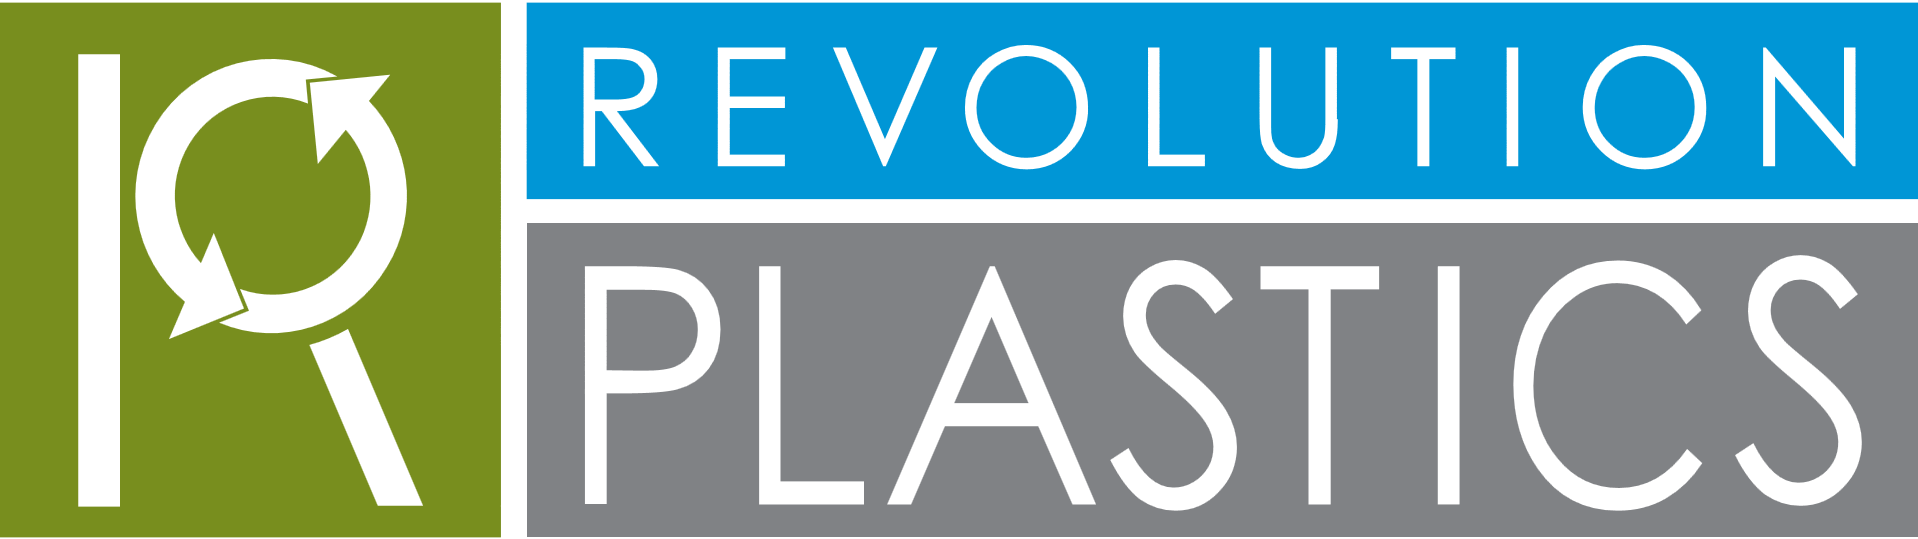 Revolution Plastics Logo